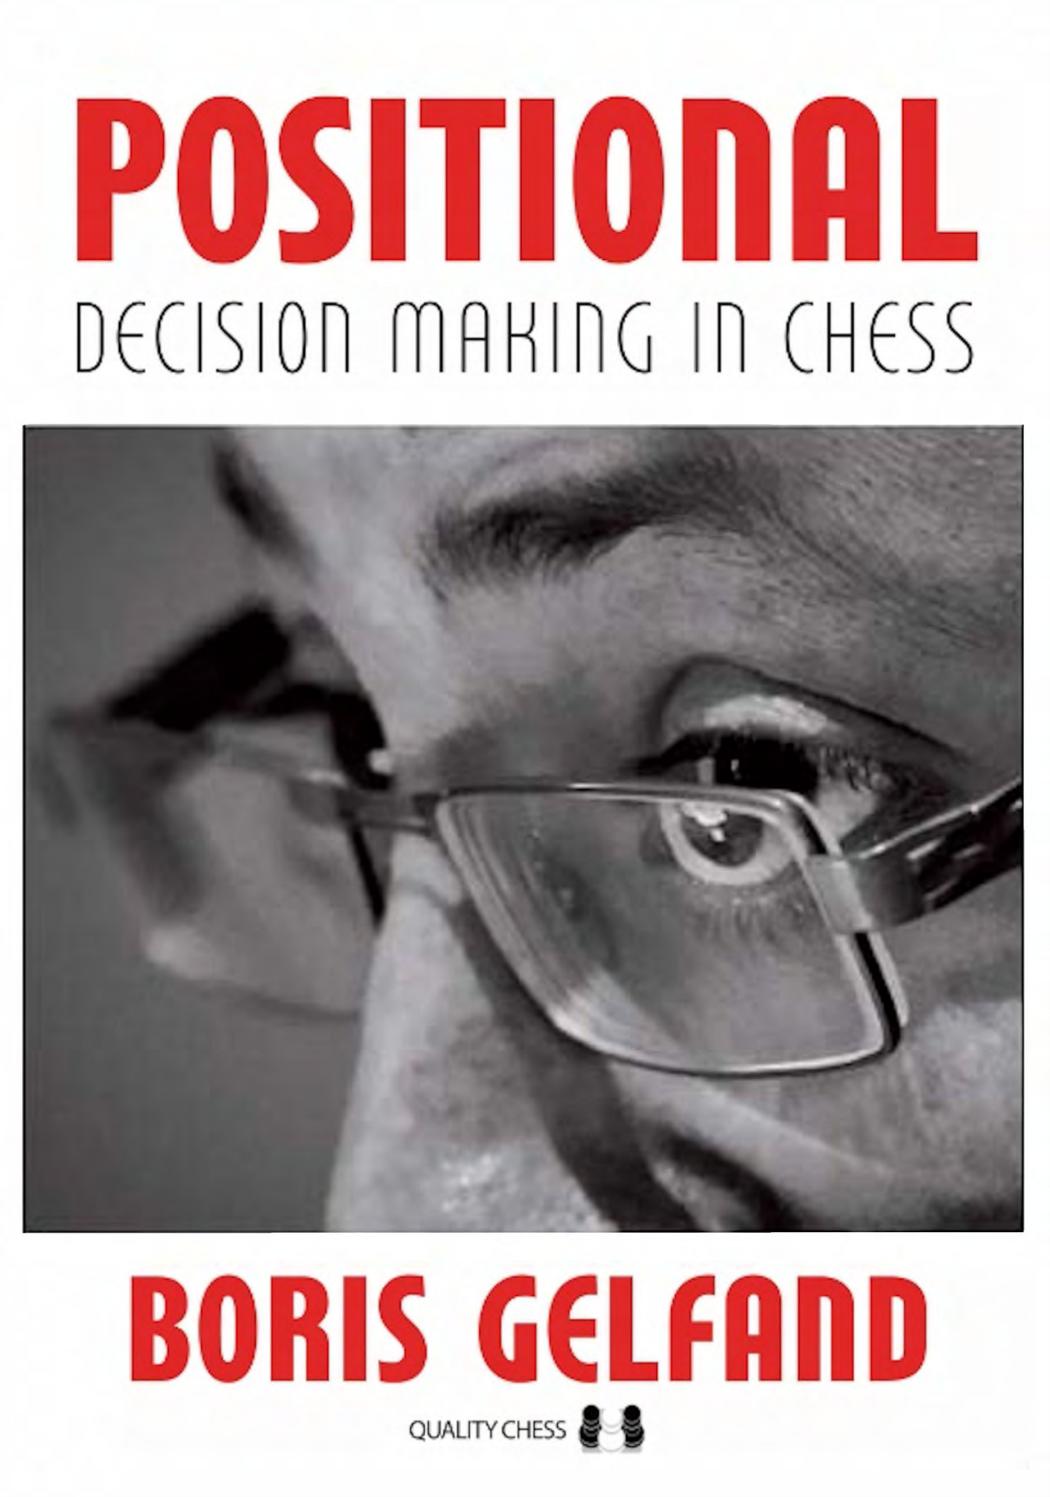 Mein Schönes Land Tv Genial Gelfand Boris Positional Decision Making In Chess by Rafael